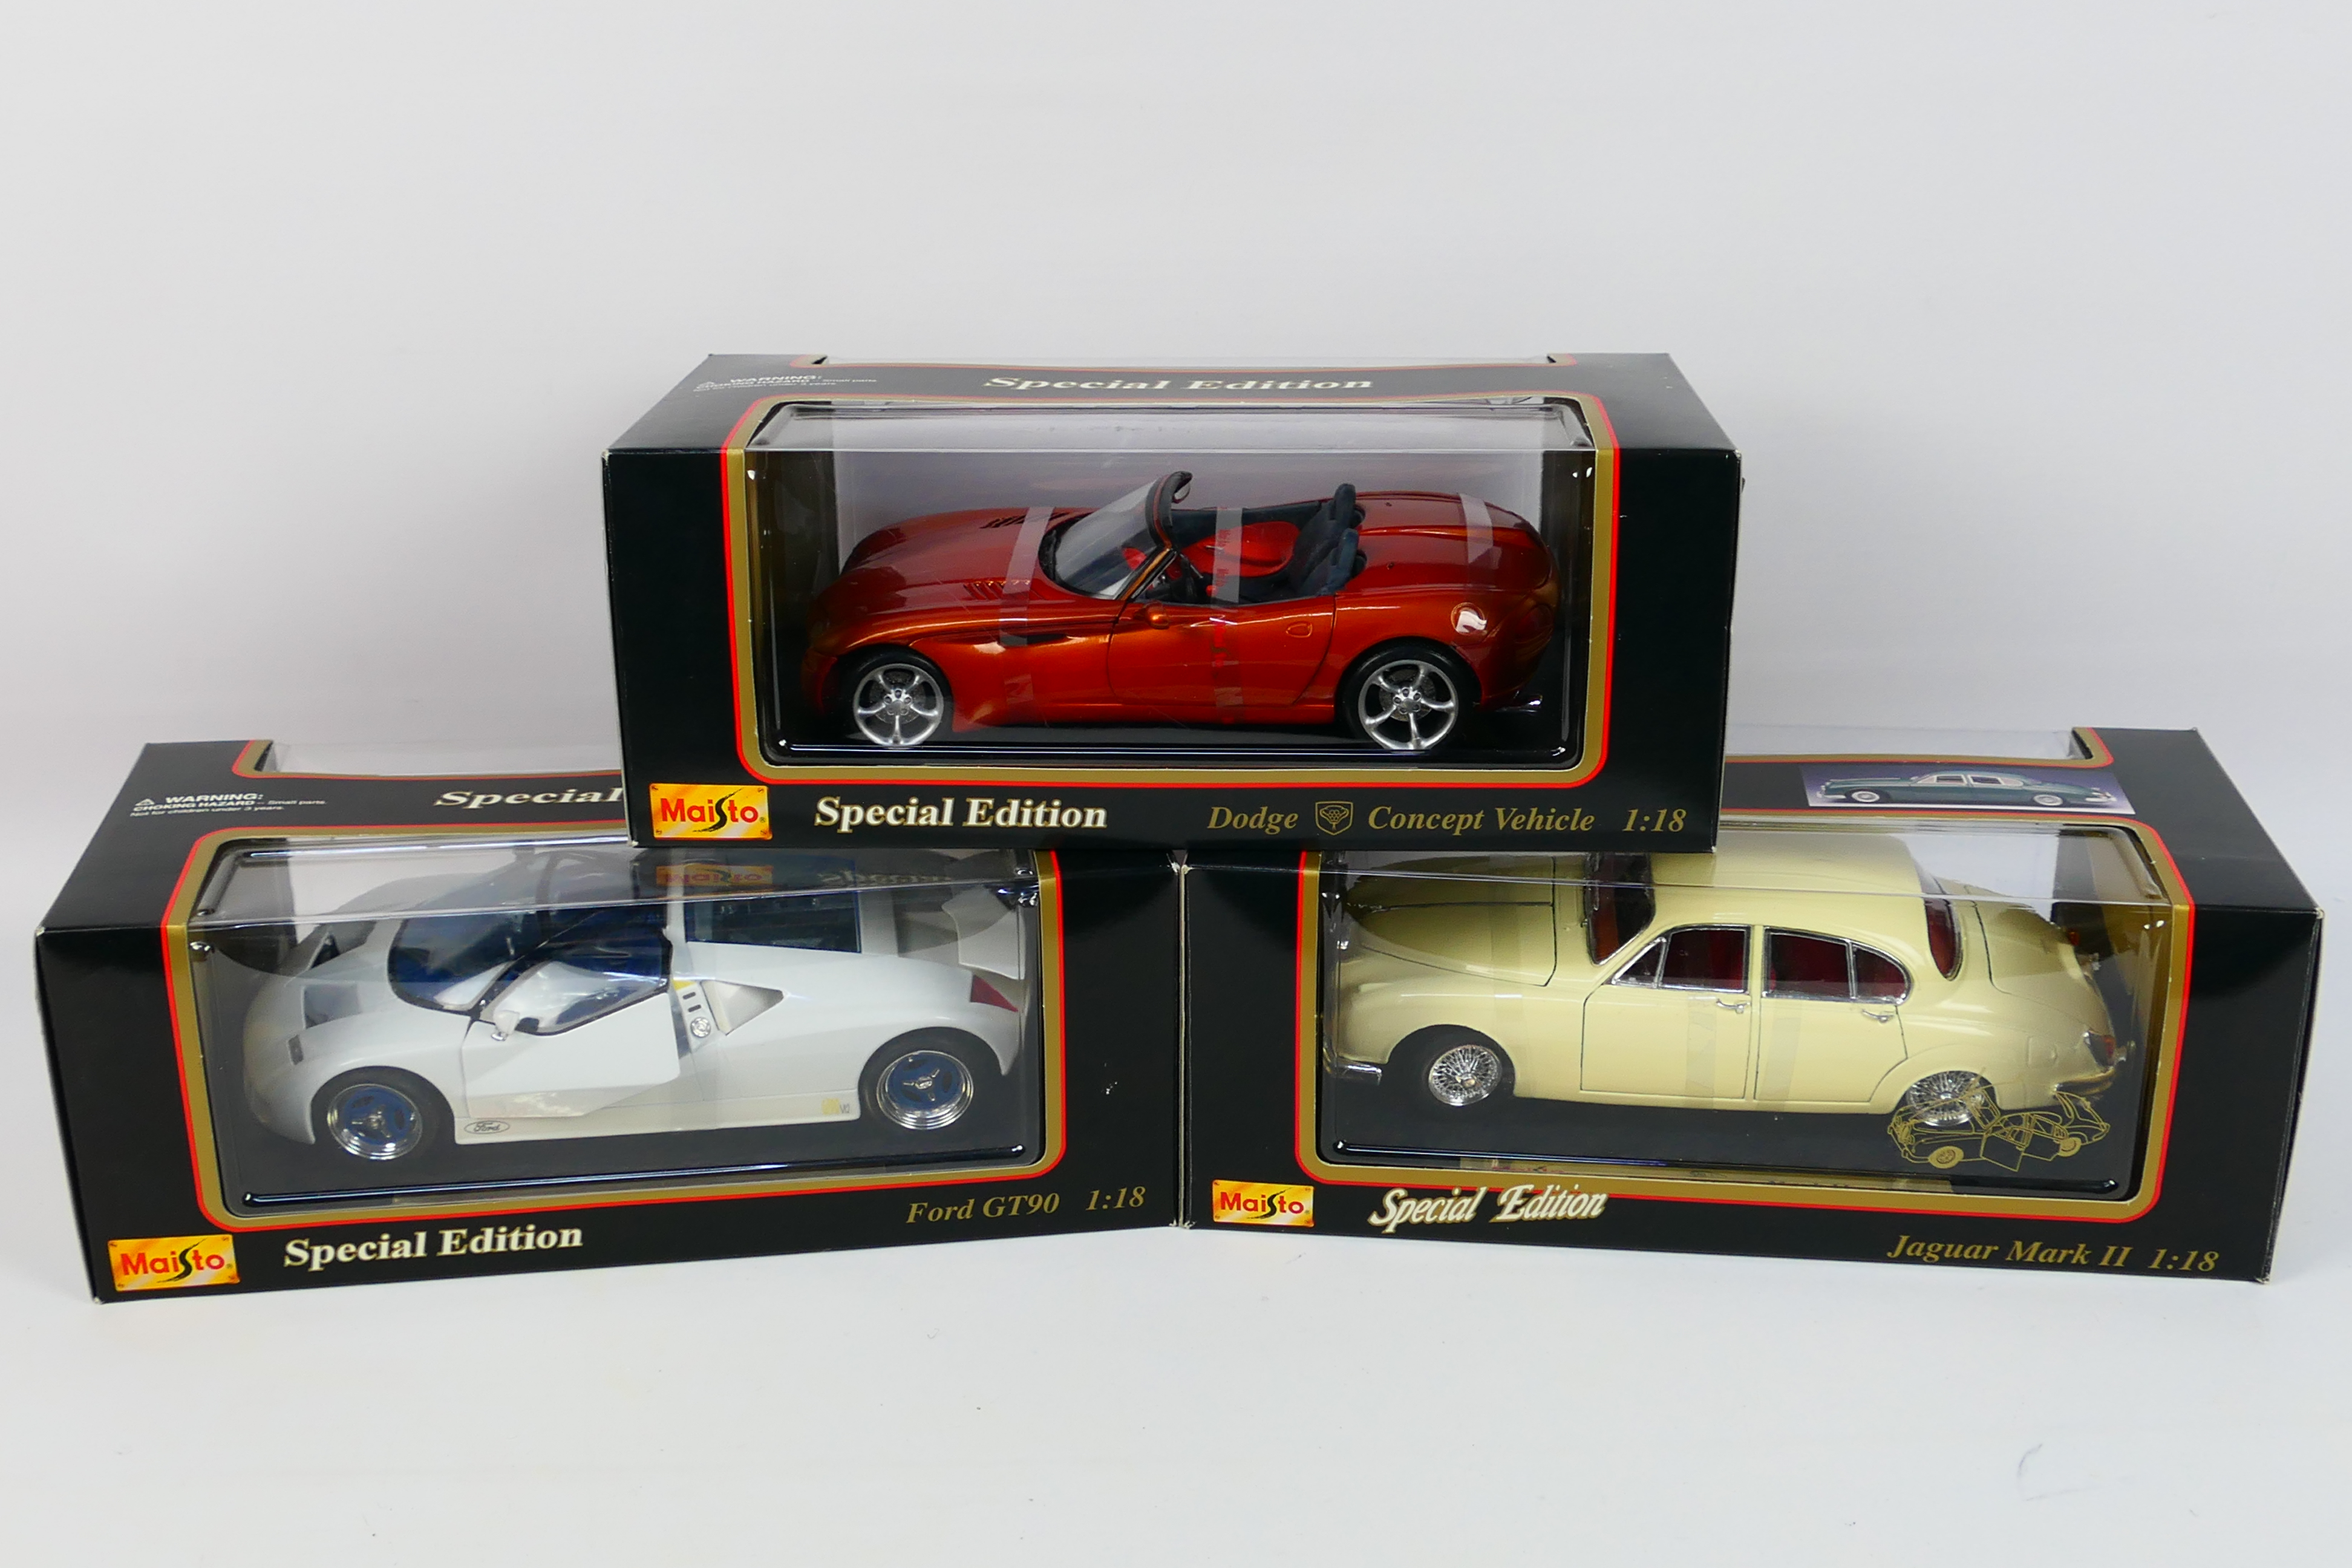 Maisto - Three boxed diecast 1:18 scale model cars from Maisto.